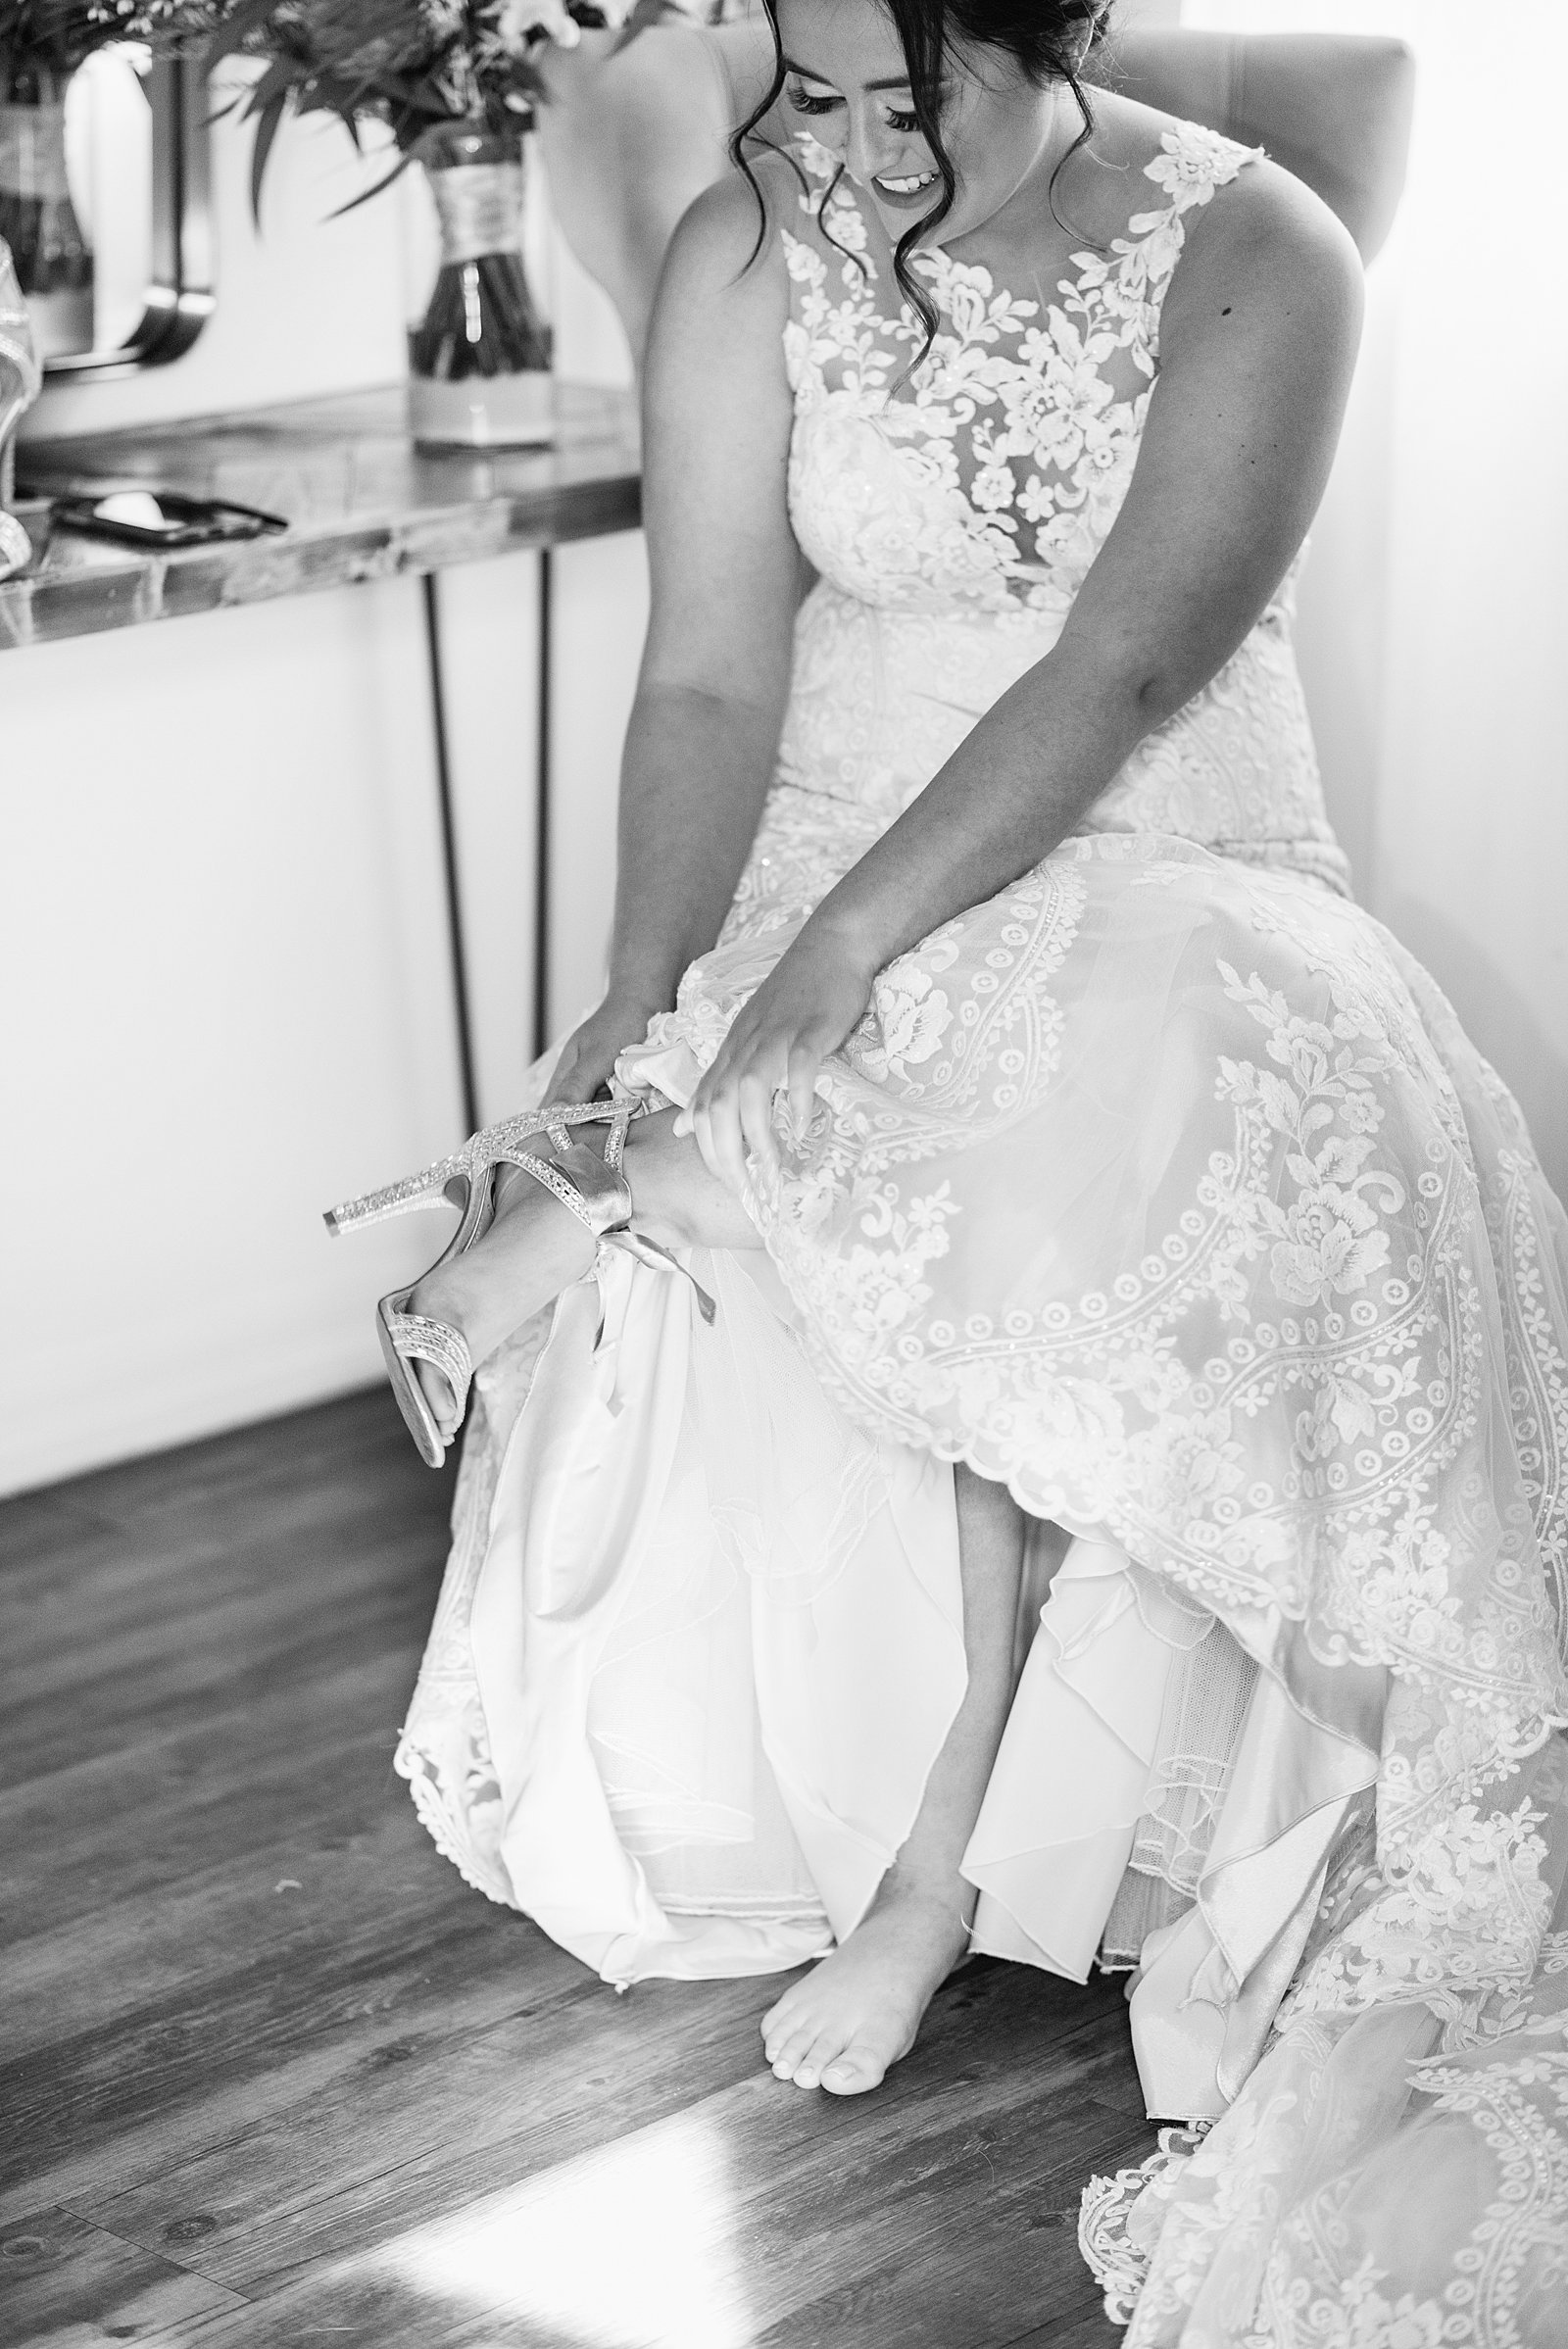 Bride getting ready for her wedding by Phoenix wedding photographers PMA Photographer